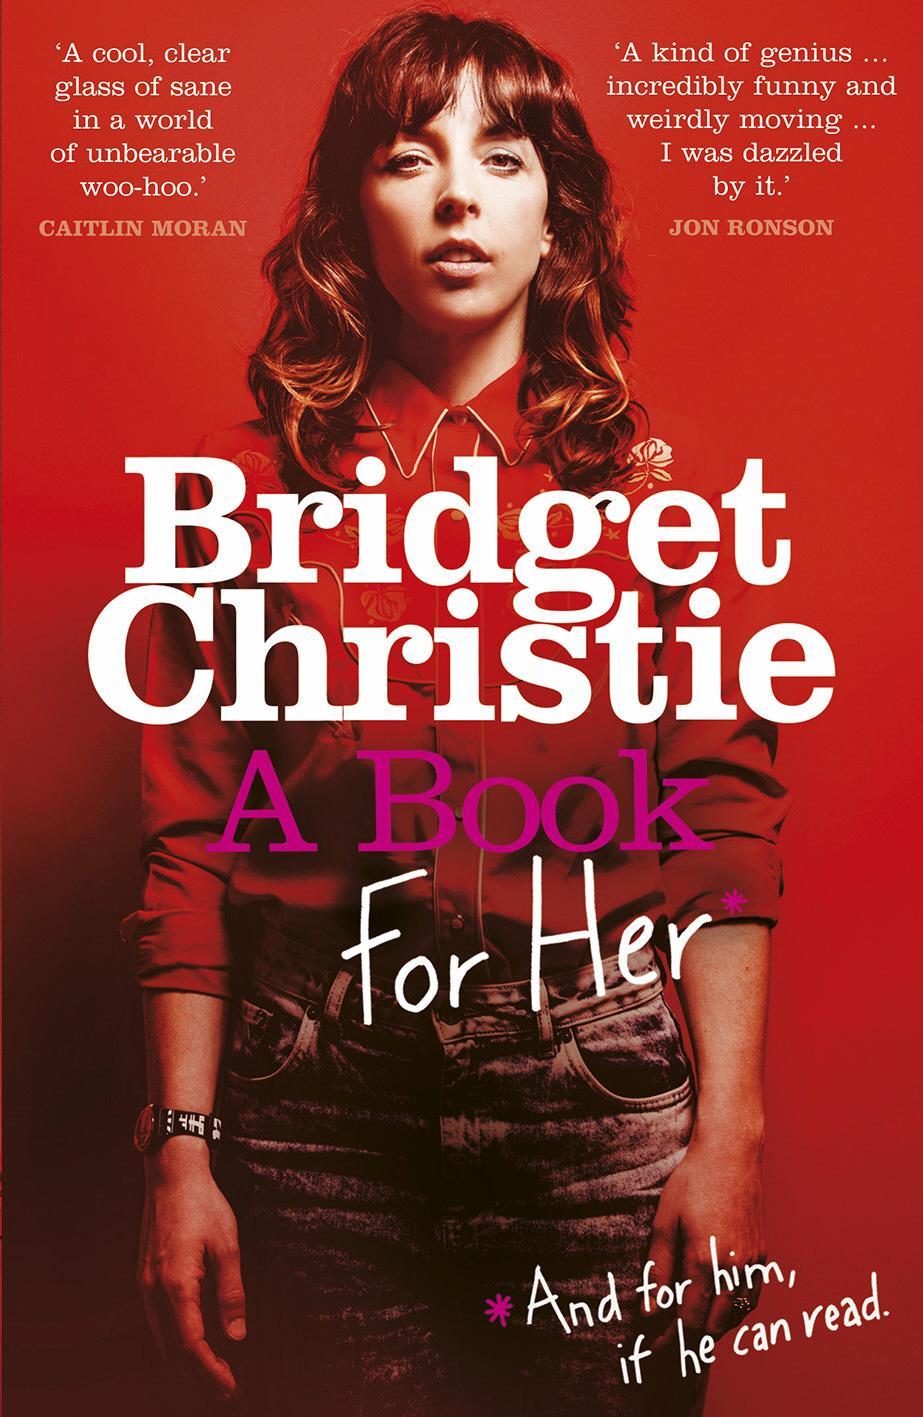 Book for Her - Bridget Christie